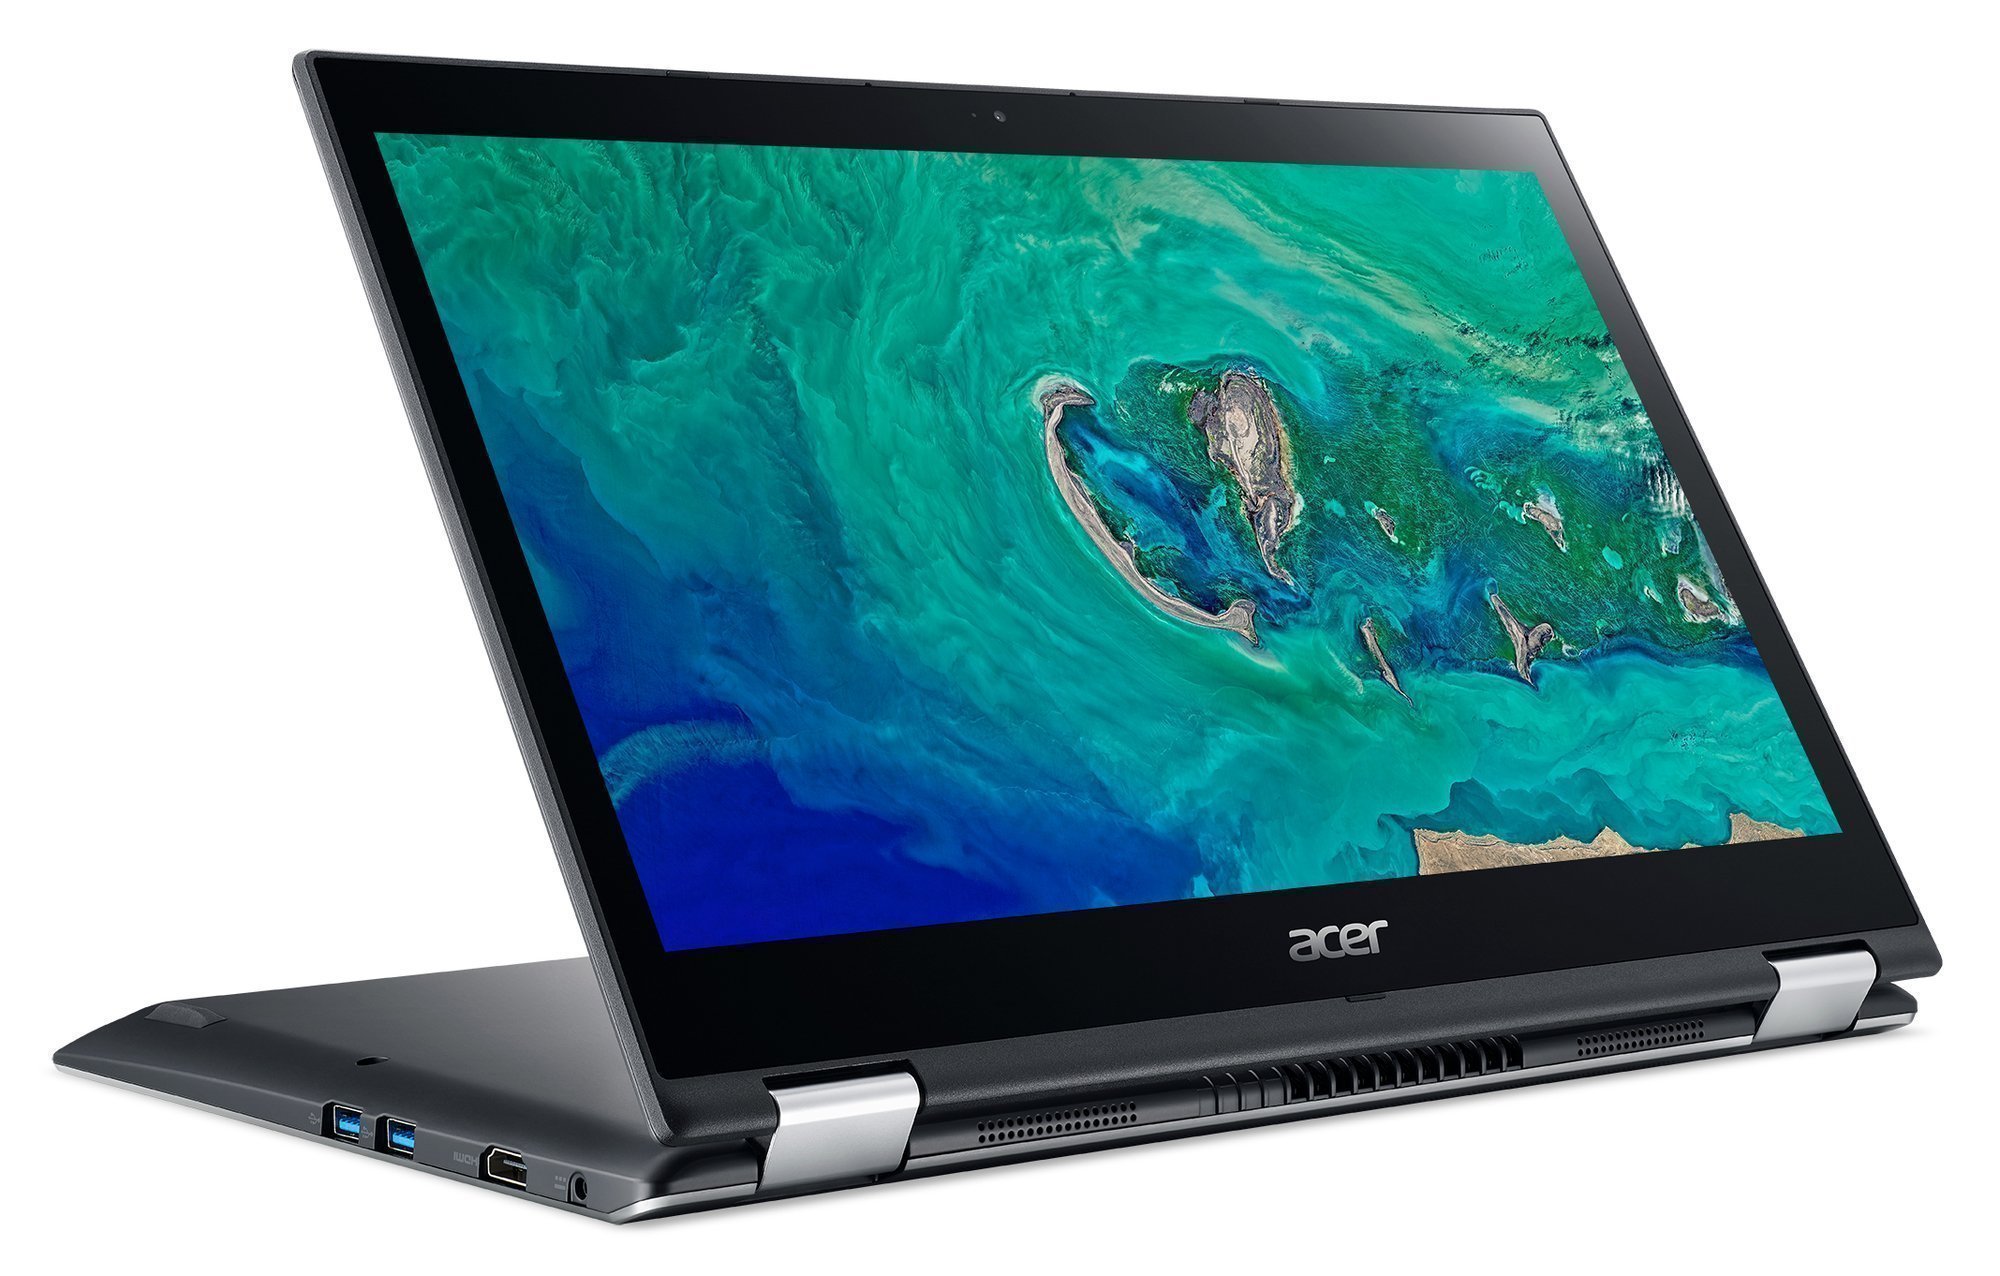 Install W10 on new Acer Nitro 5 Laptop. Preexisting system partition? 8ac3057169da8bfe56e5ce3adecbb236.jpg